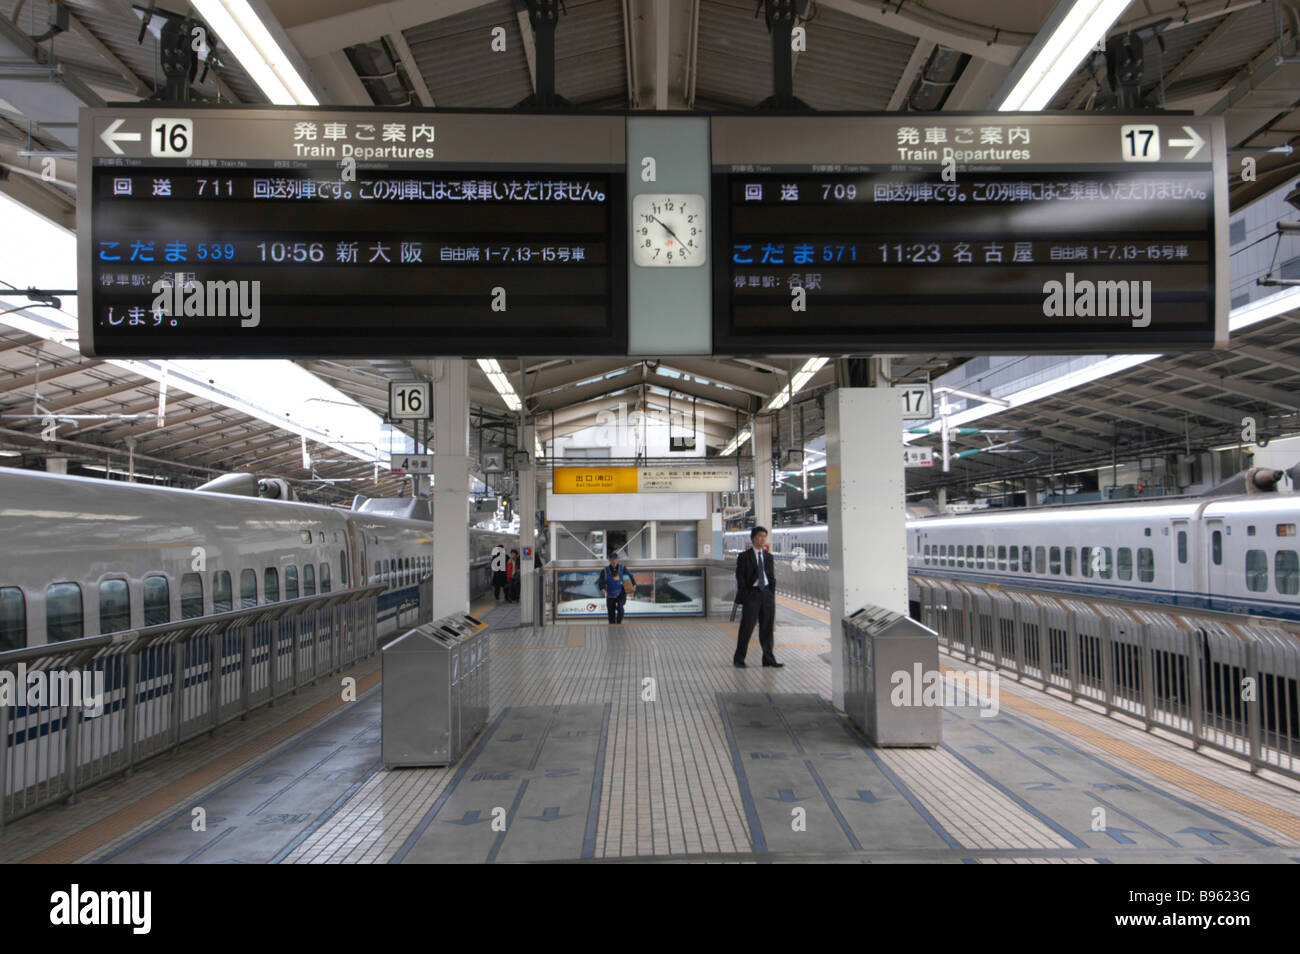 JAPAN Honshu Tokyo Tokyo Station a bilingual train departure display on the platform. Stock Photo